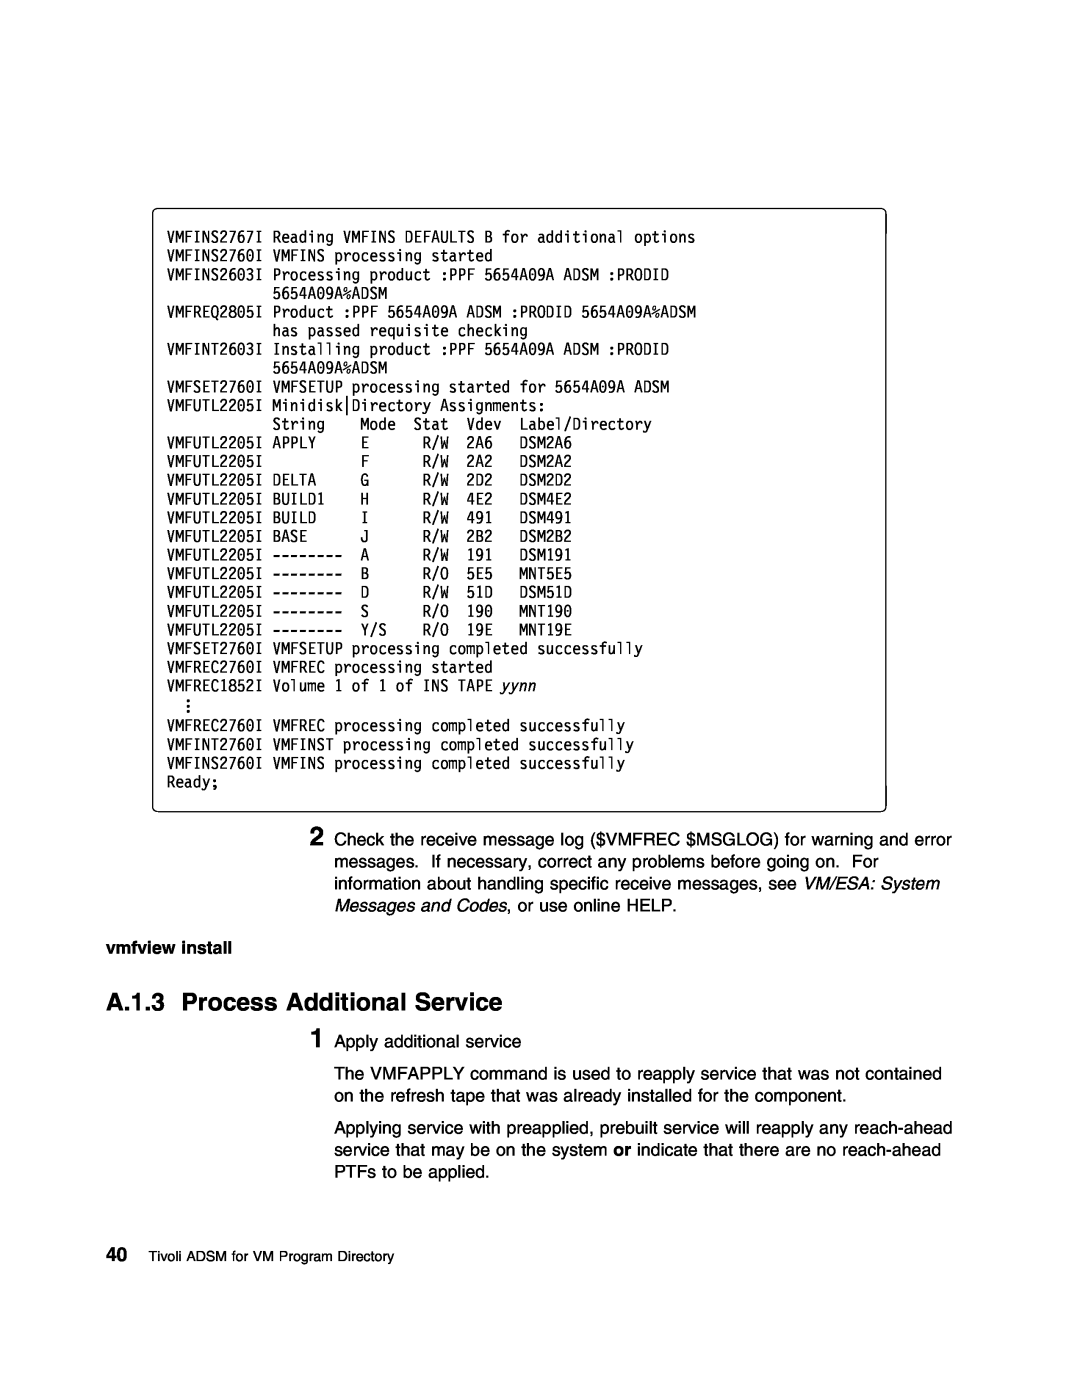 IBM 5697-VM3 manual A.1.3 Process Additional Service, vmfview install 